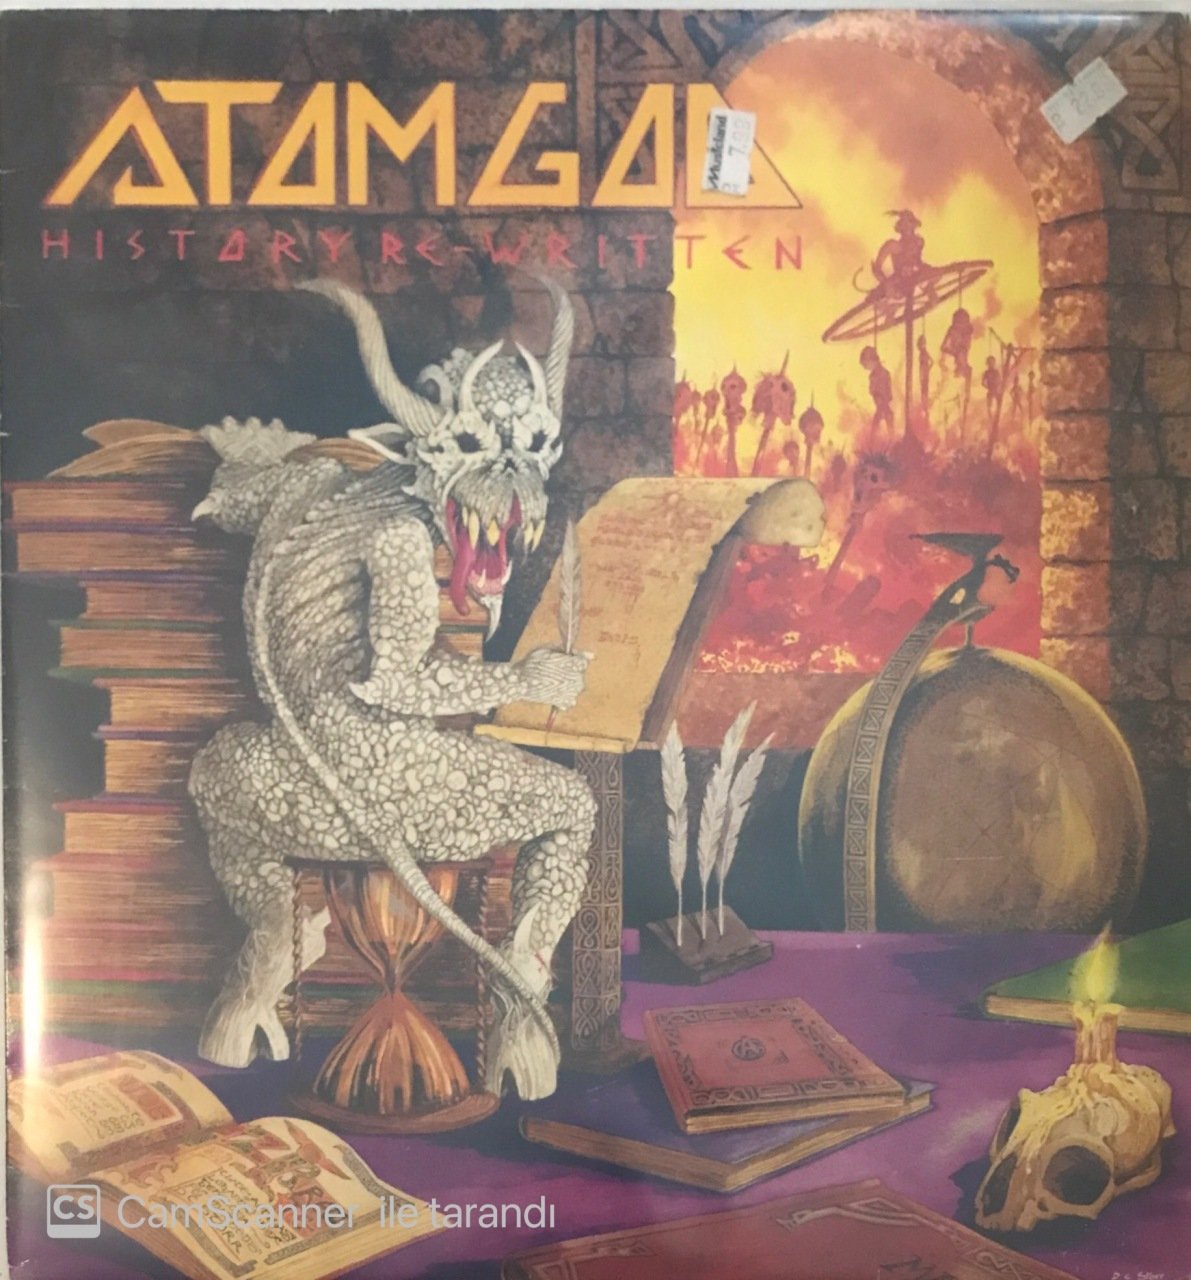 Atom God History Re-Written LP